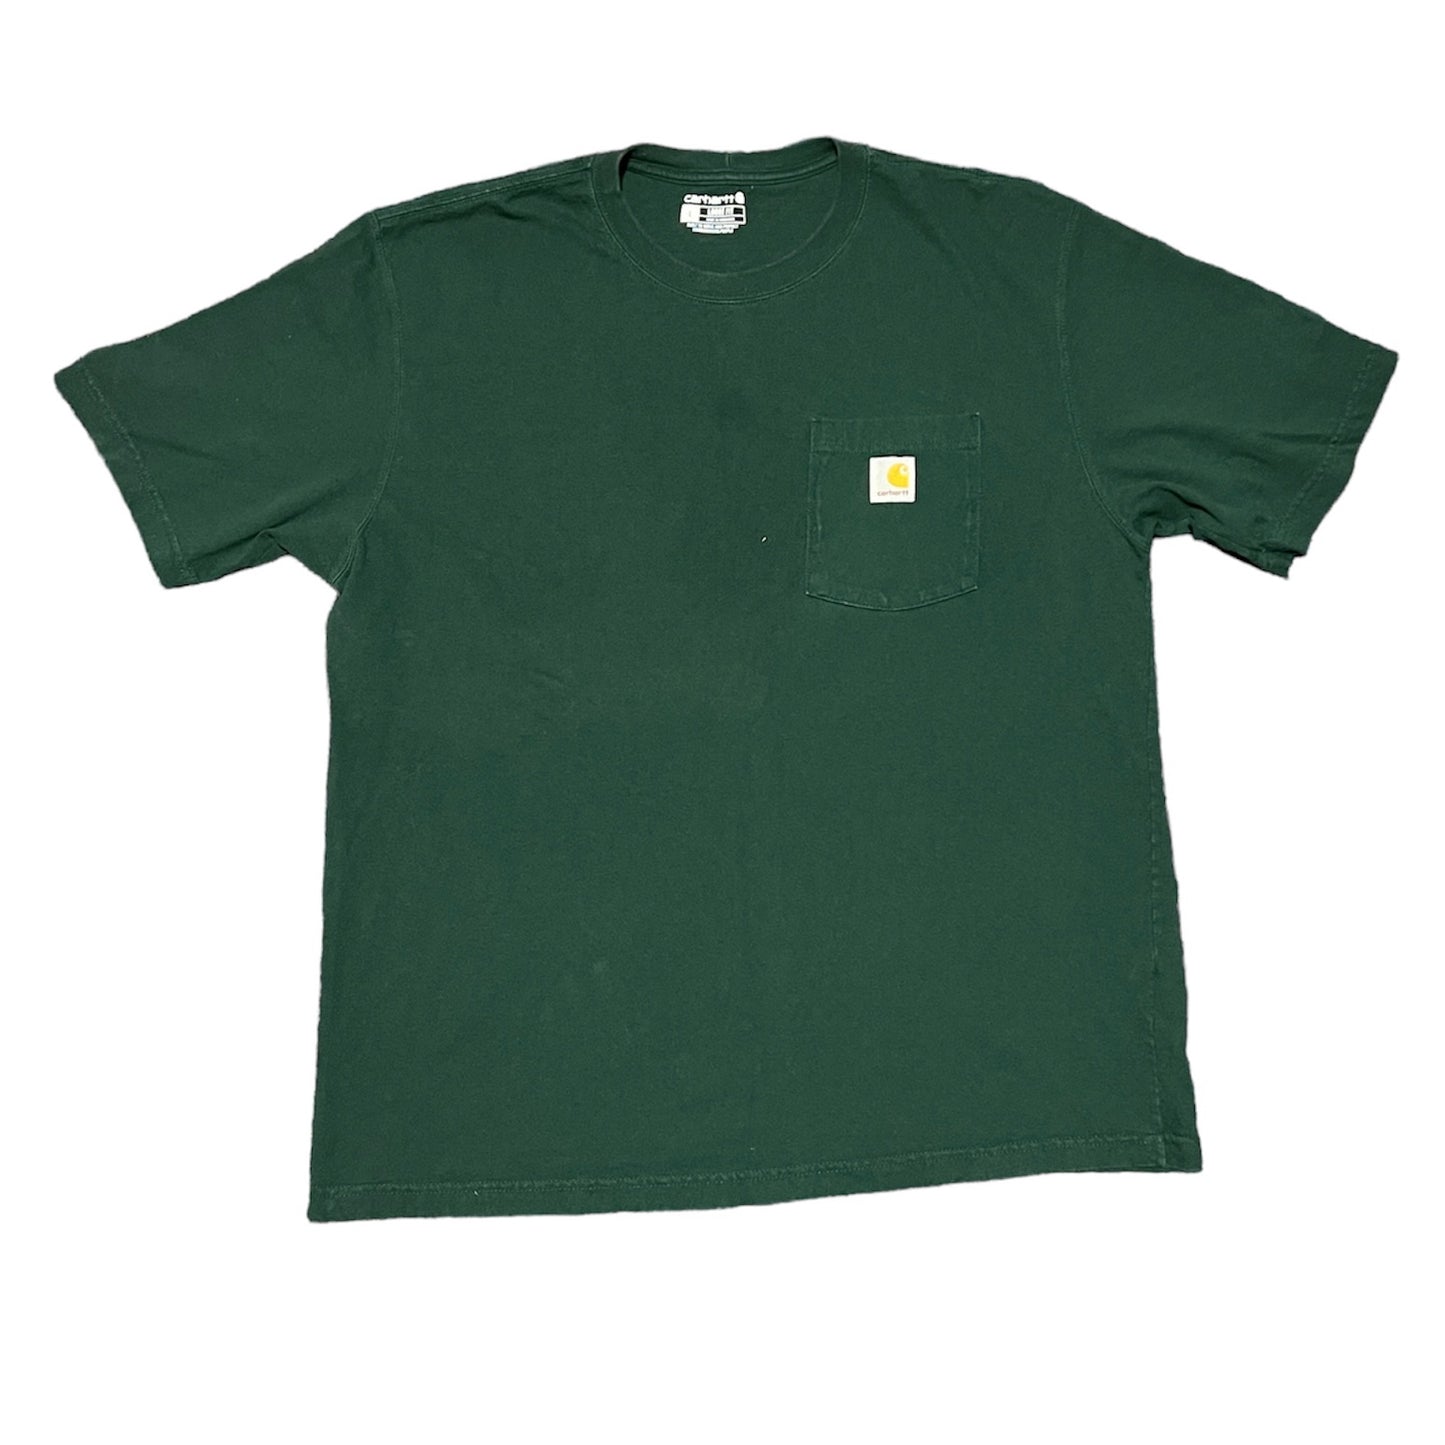 Carhartt Shirt Green T-shirt Loose Fit Comfort Size Large